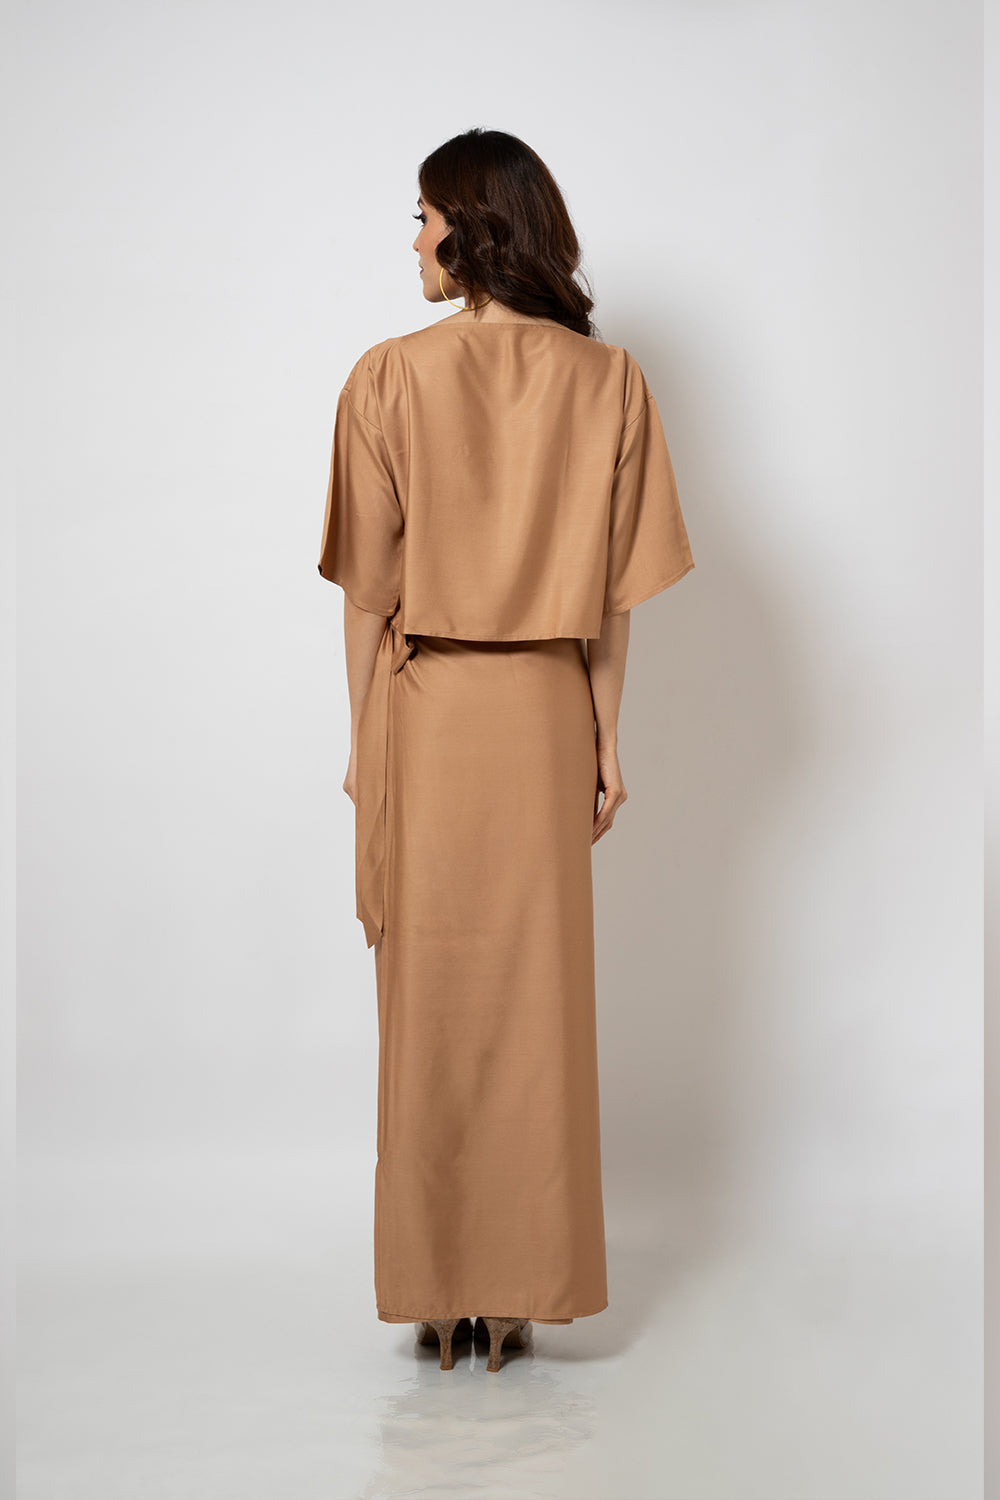 5. A Beige cotton silk blend co-ord crop top and skirt set